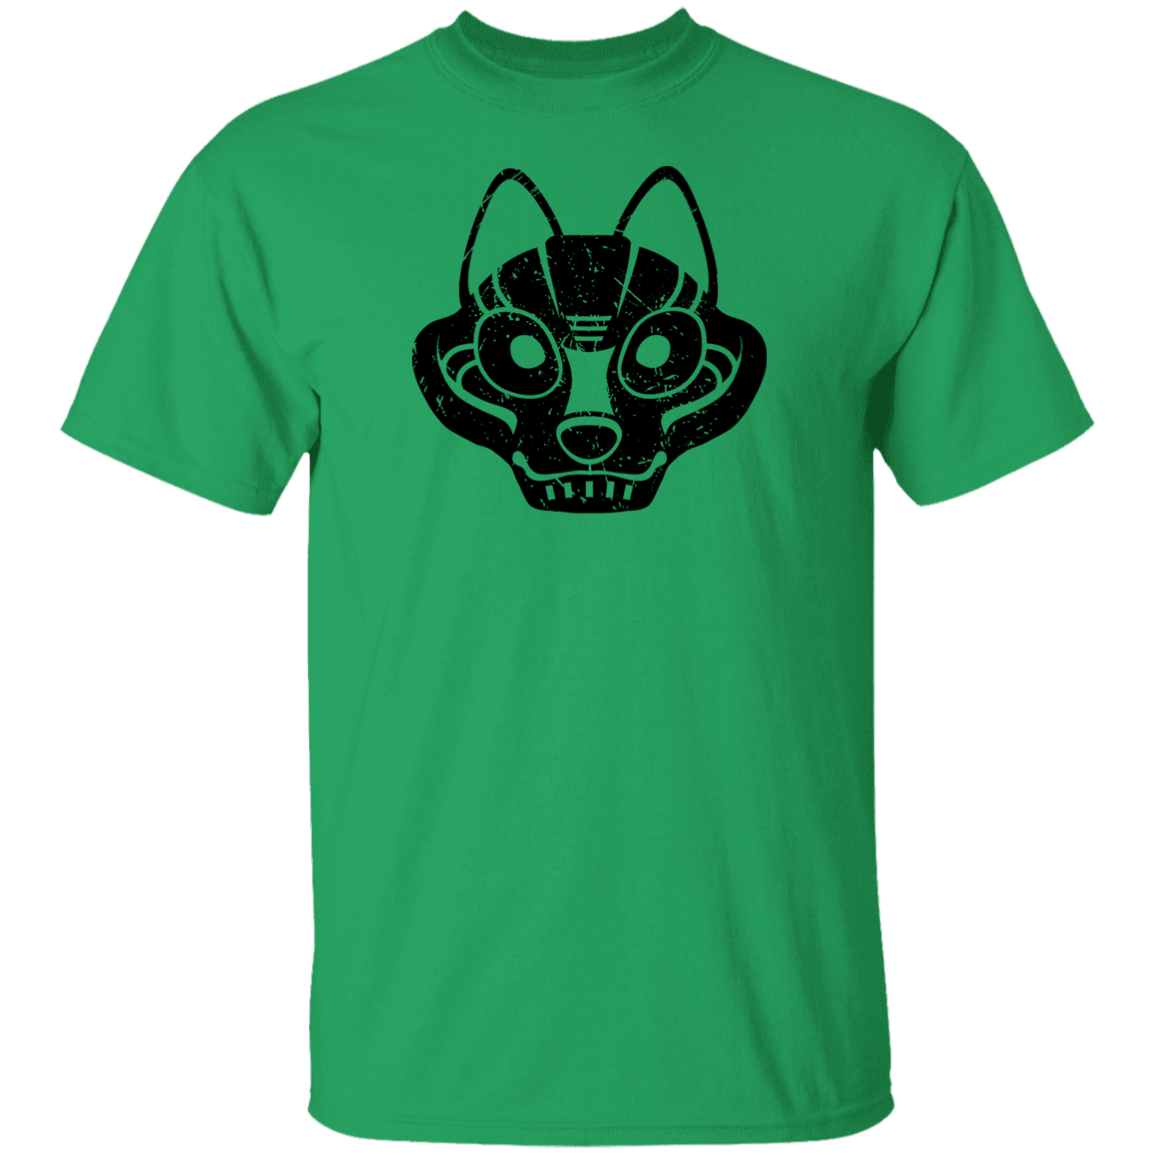 Black Distressed Emblem T-Shirt for Kids (Wolf/Wolf Squad)